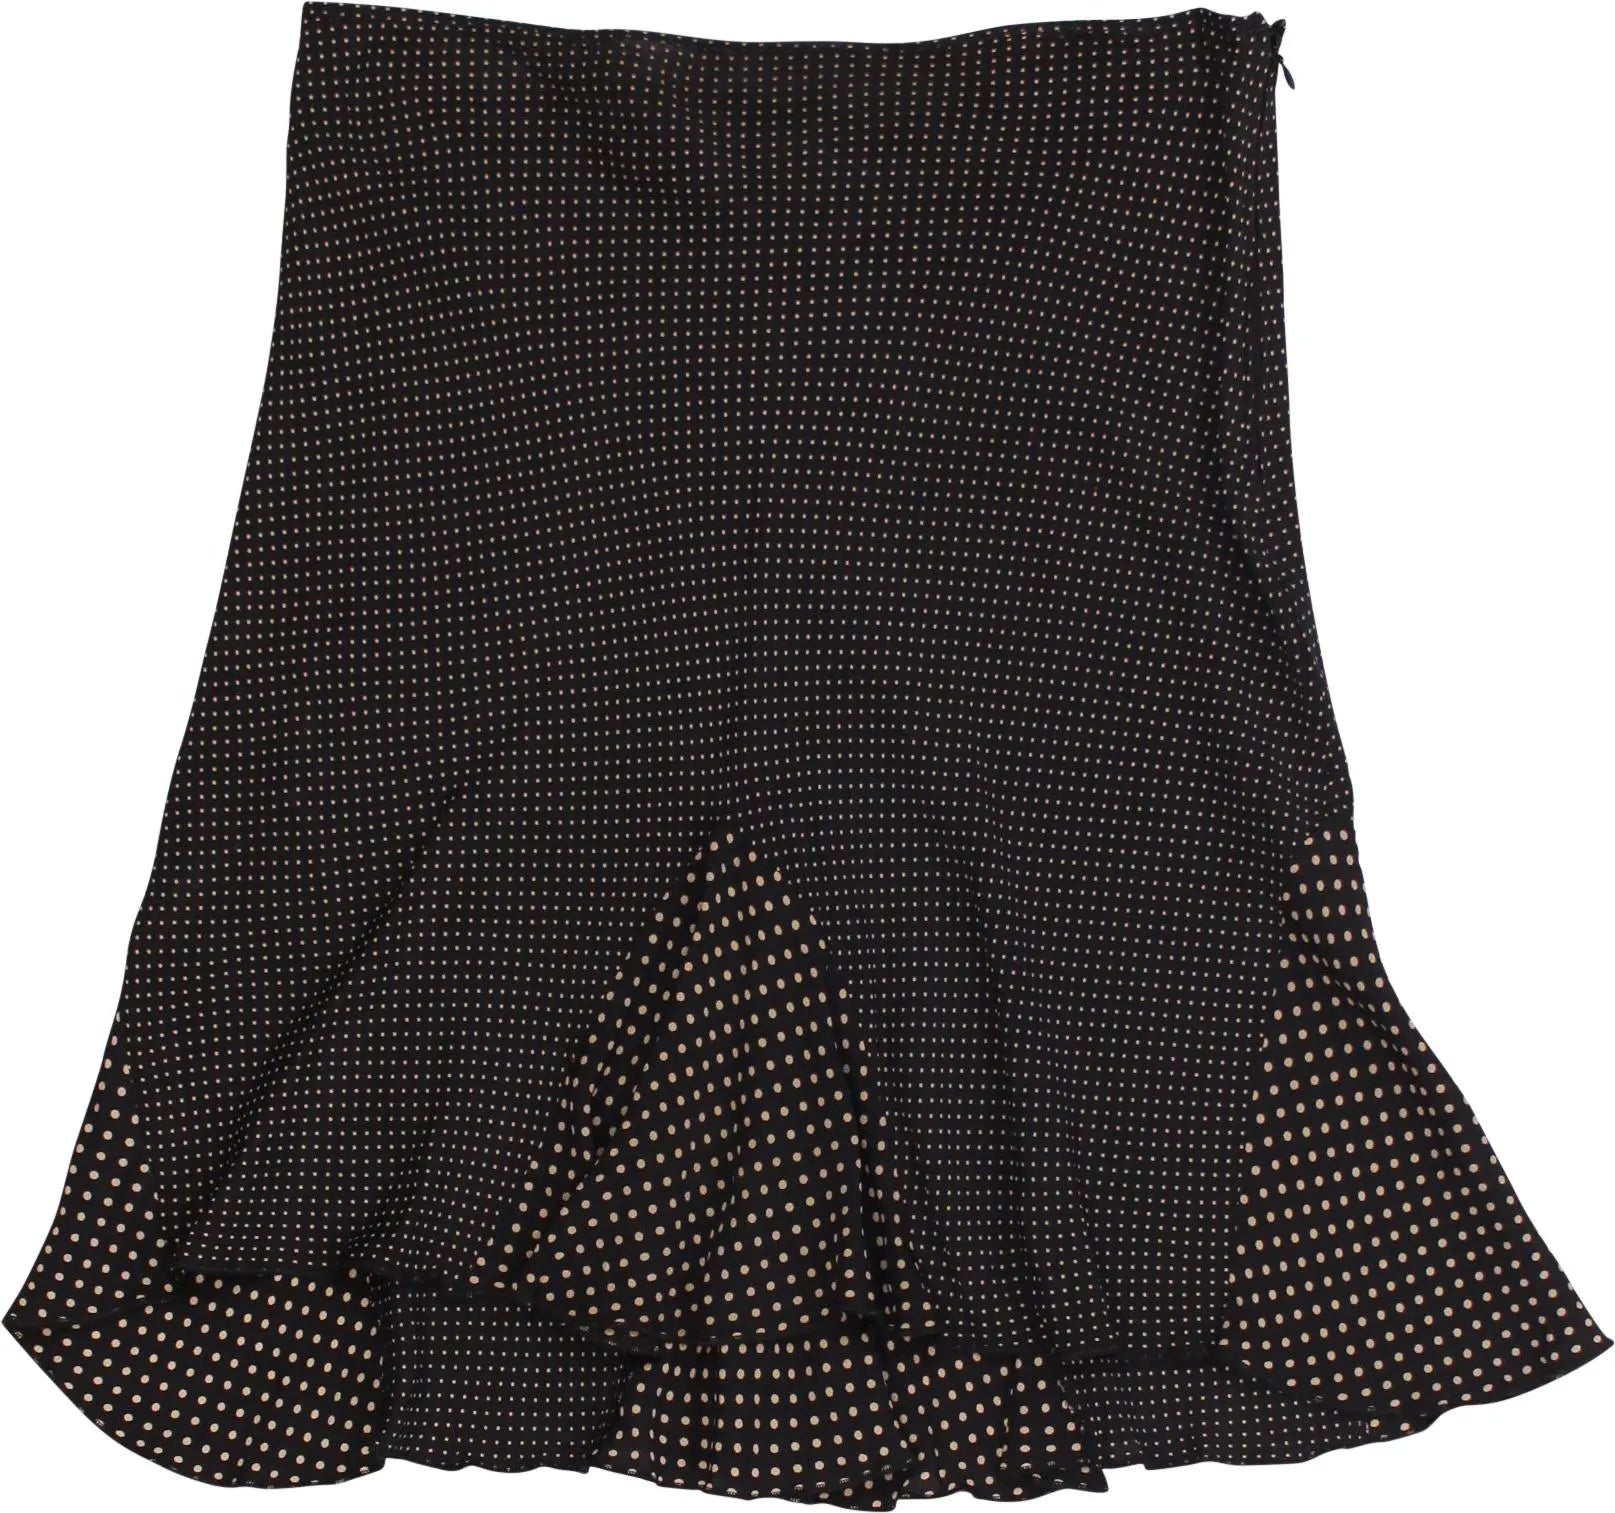 Handmade - Polka Dot Skirt- ThriftTale.com - Vintage and second handclothing